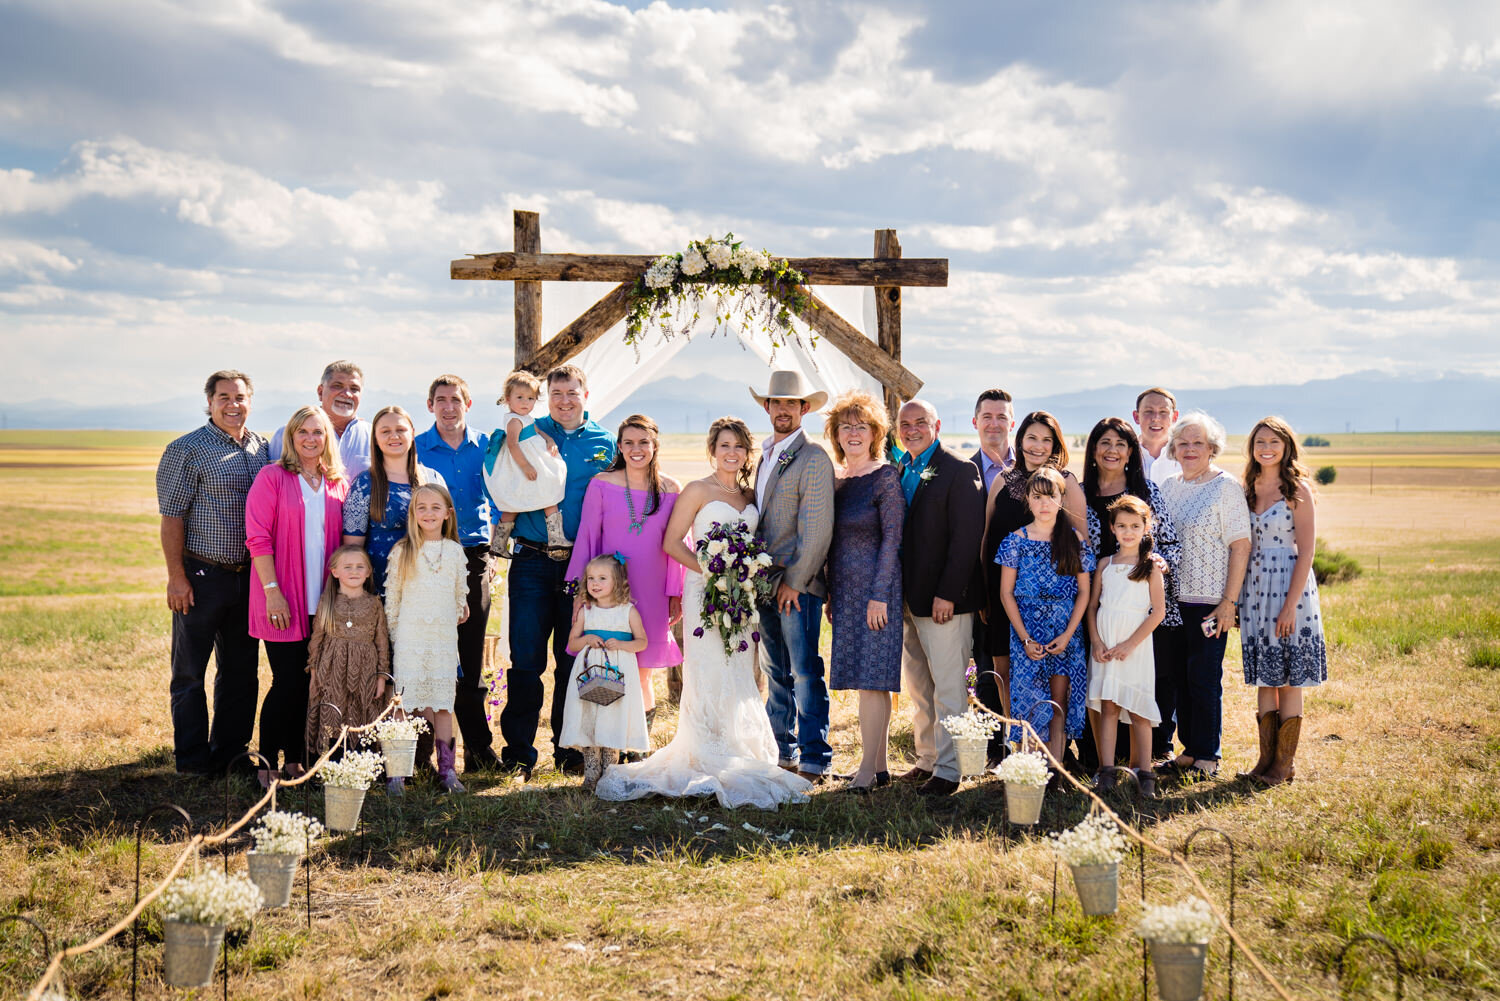  Nunn, Colorado wedding by Fort Collins, Colorado Wedding Photographer JMGant Photography. 